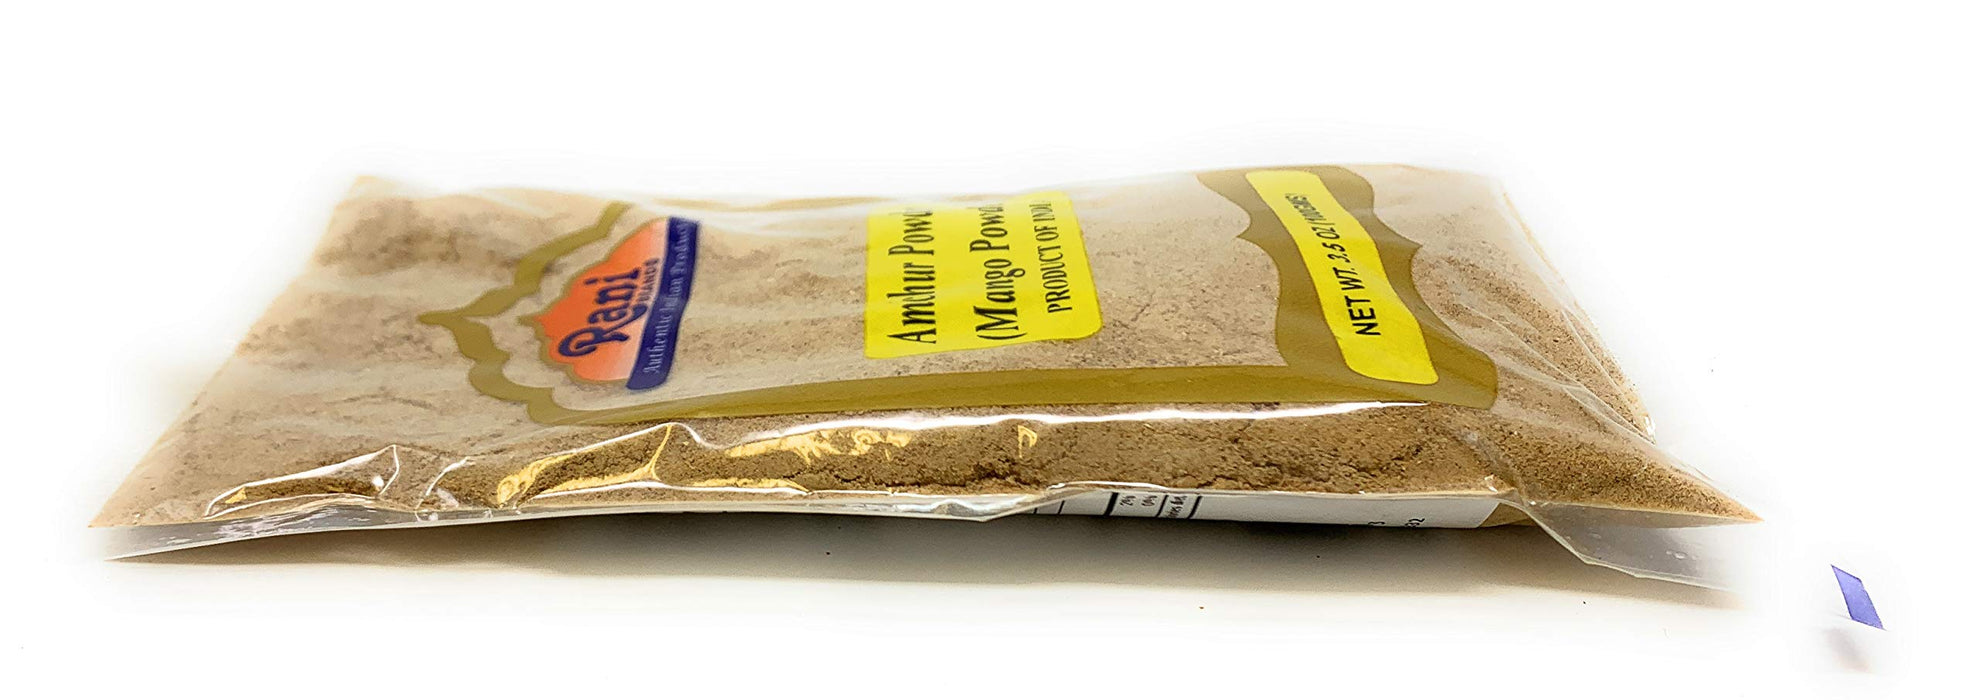 Rani Amchur (Mango) Ground Powder Spice 3.5oz (100g) ~ All Natural | Gluten Friendly | Vegan | NON-GMO | No Salt or Fillers | Indian Origin